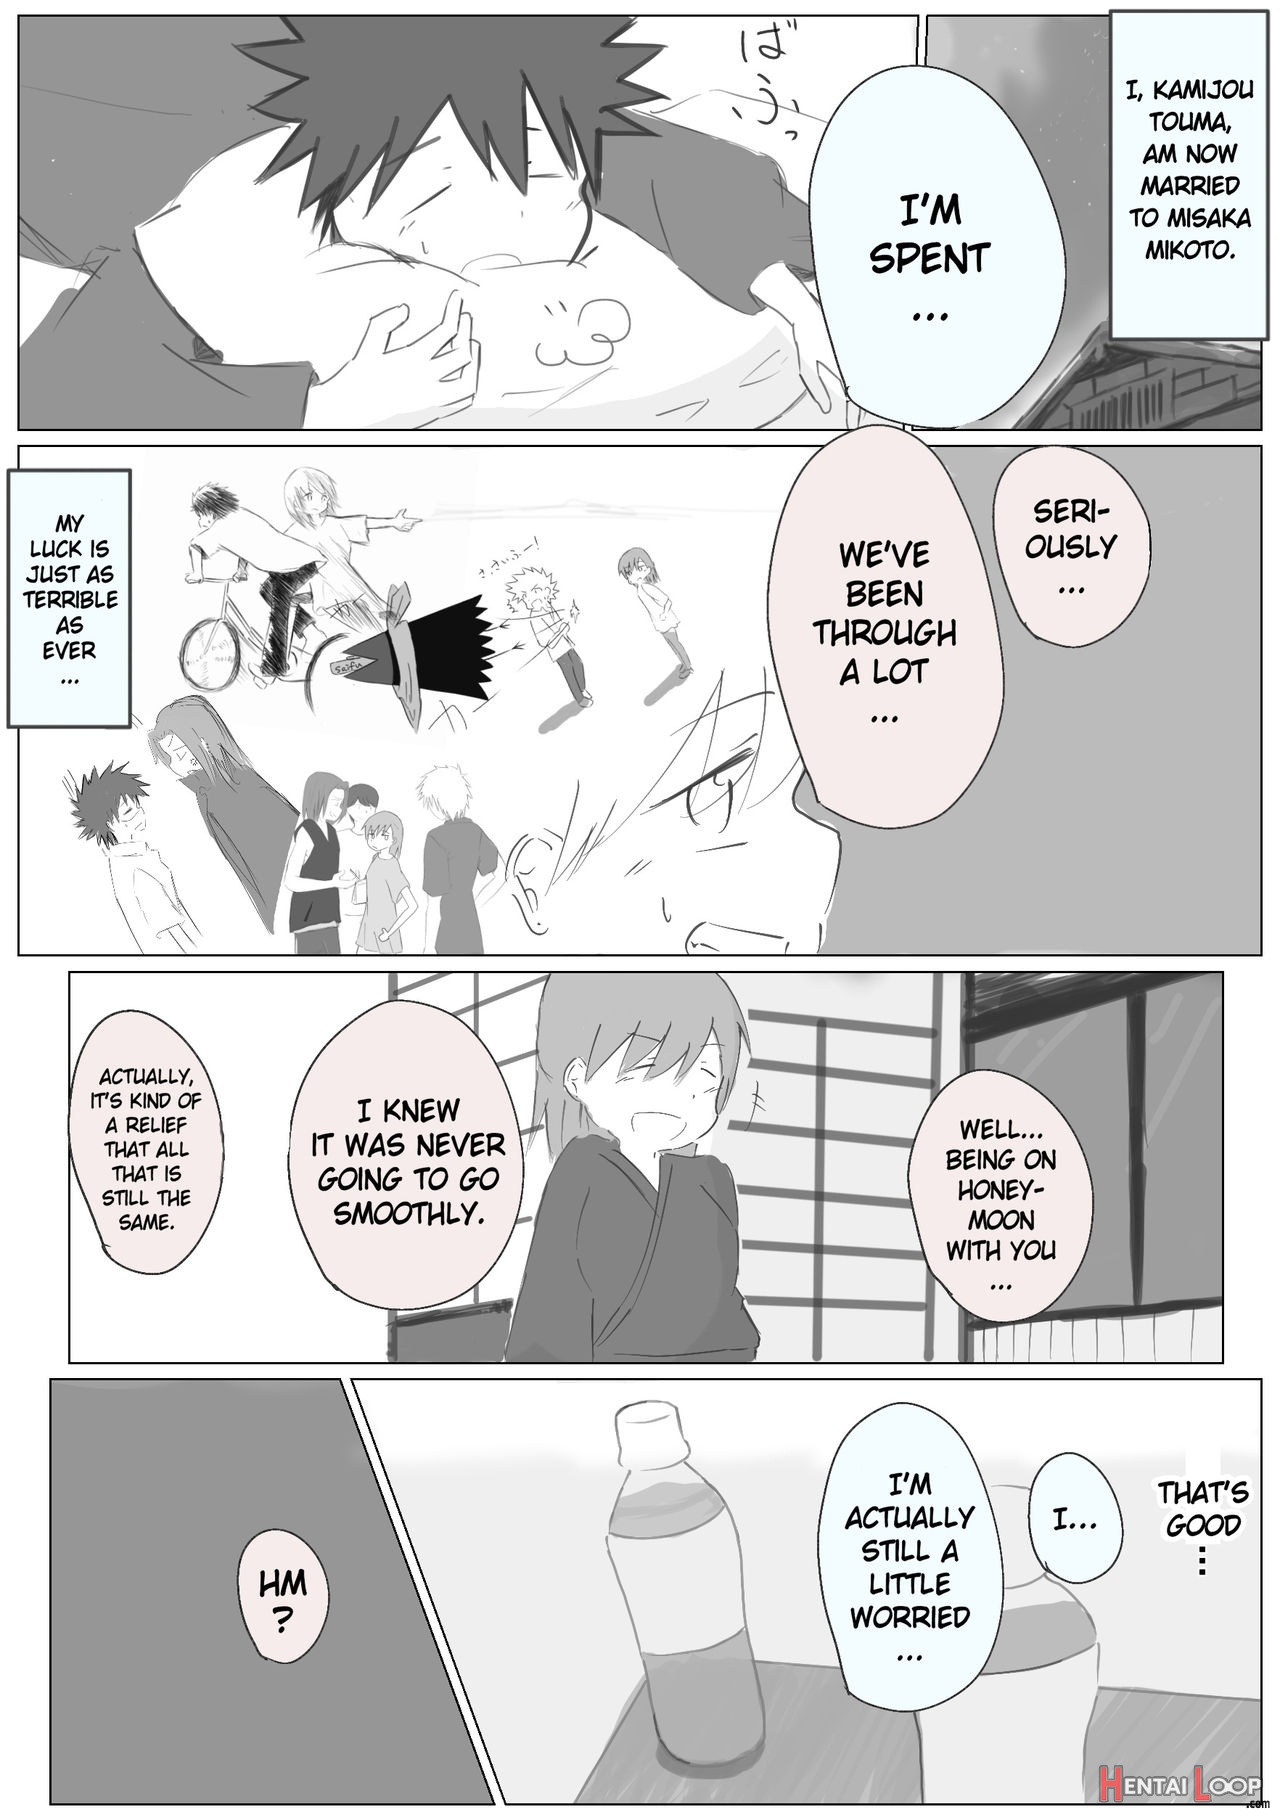 Kamikoto's First Night As Newlyweds page 3